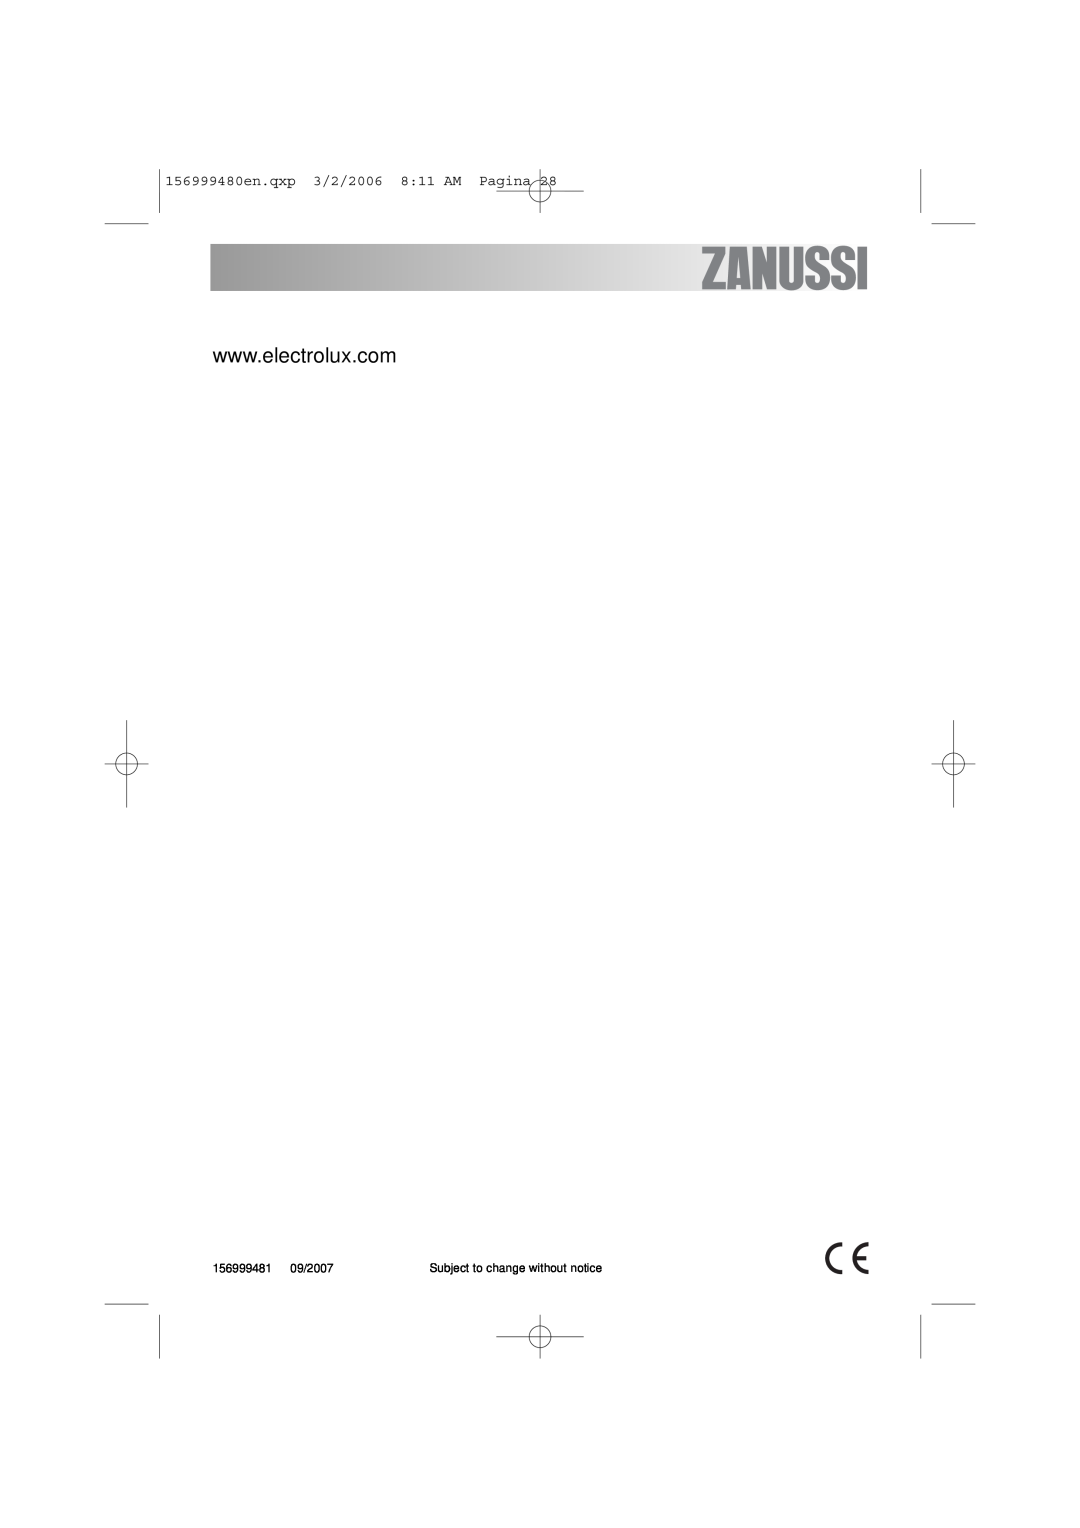 Zanussi ZDF311 user manual 156999480en.qxp 3/2/2006 811 AM Pagina, 156999481 09/2007, Subject to change without notice 